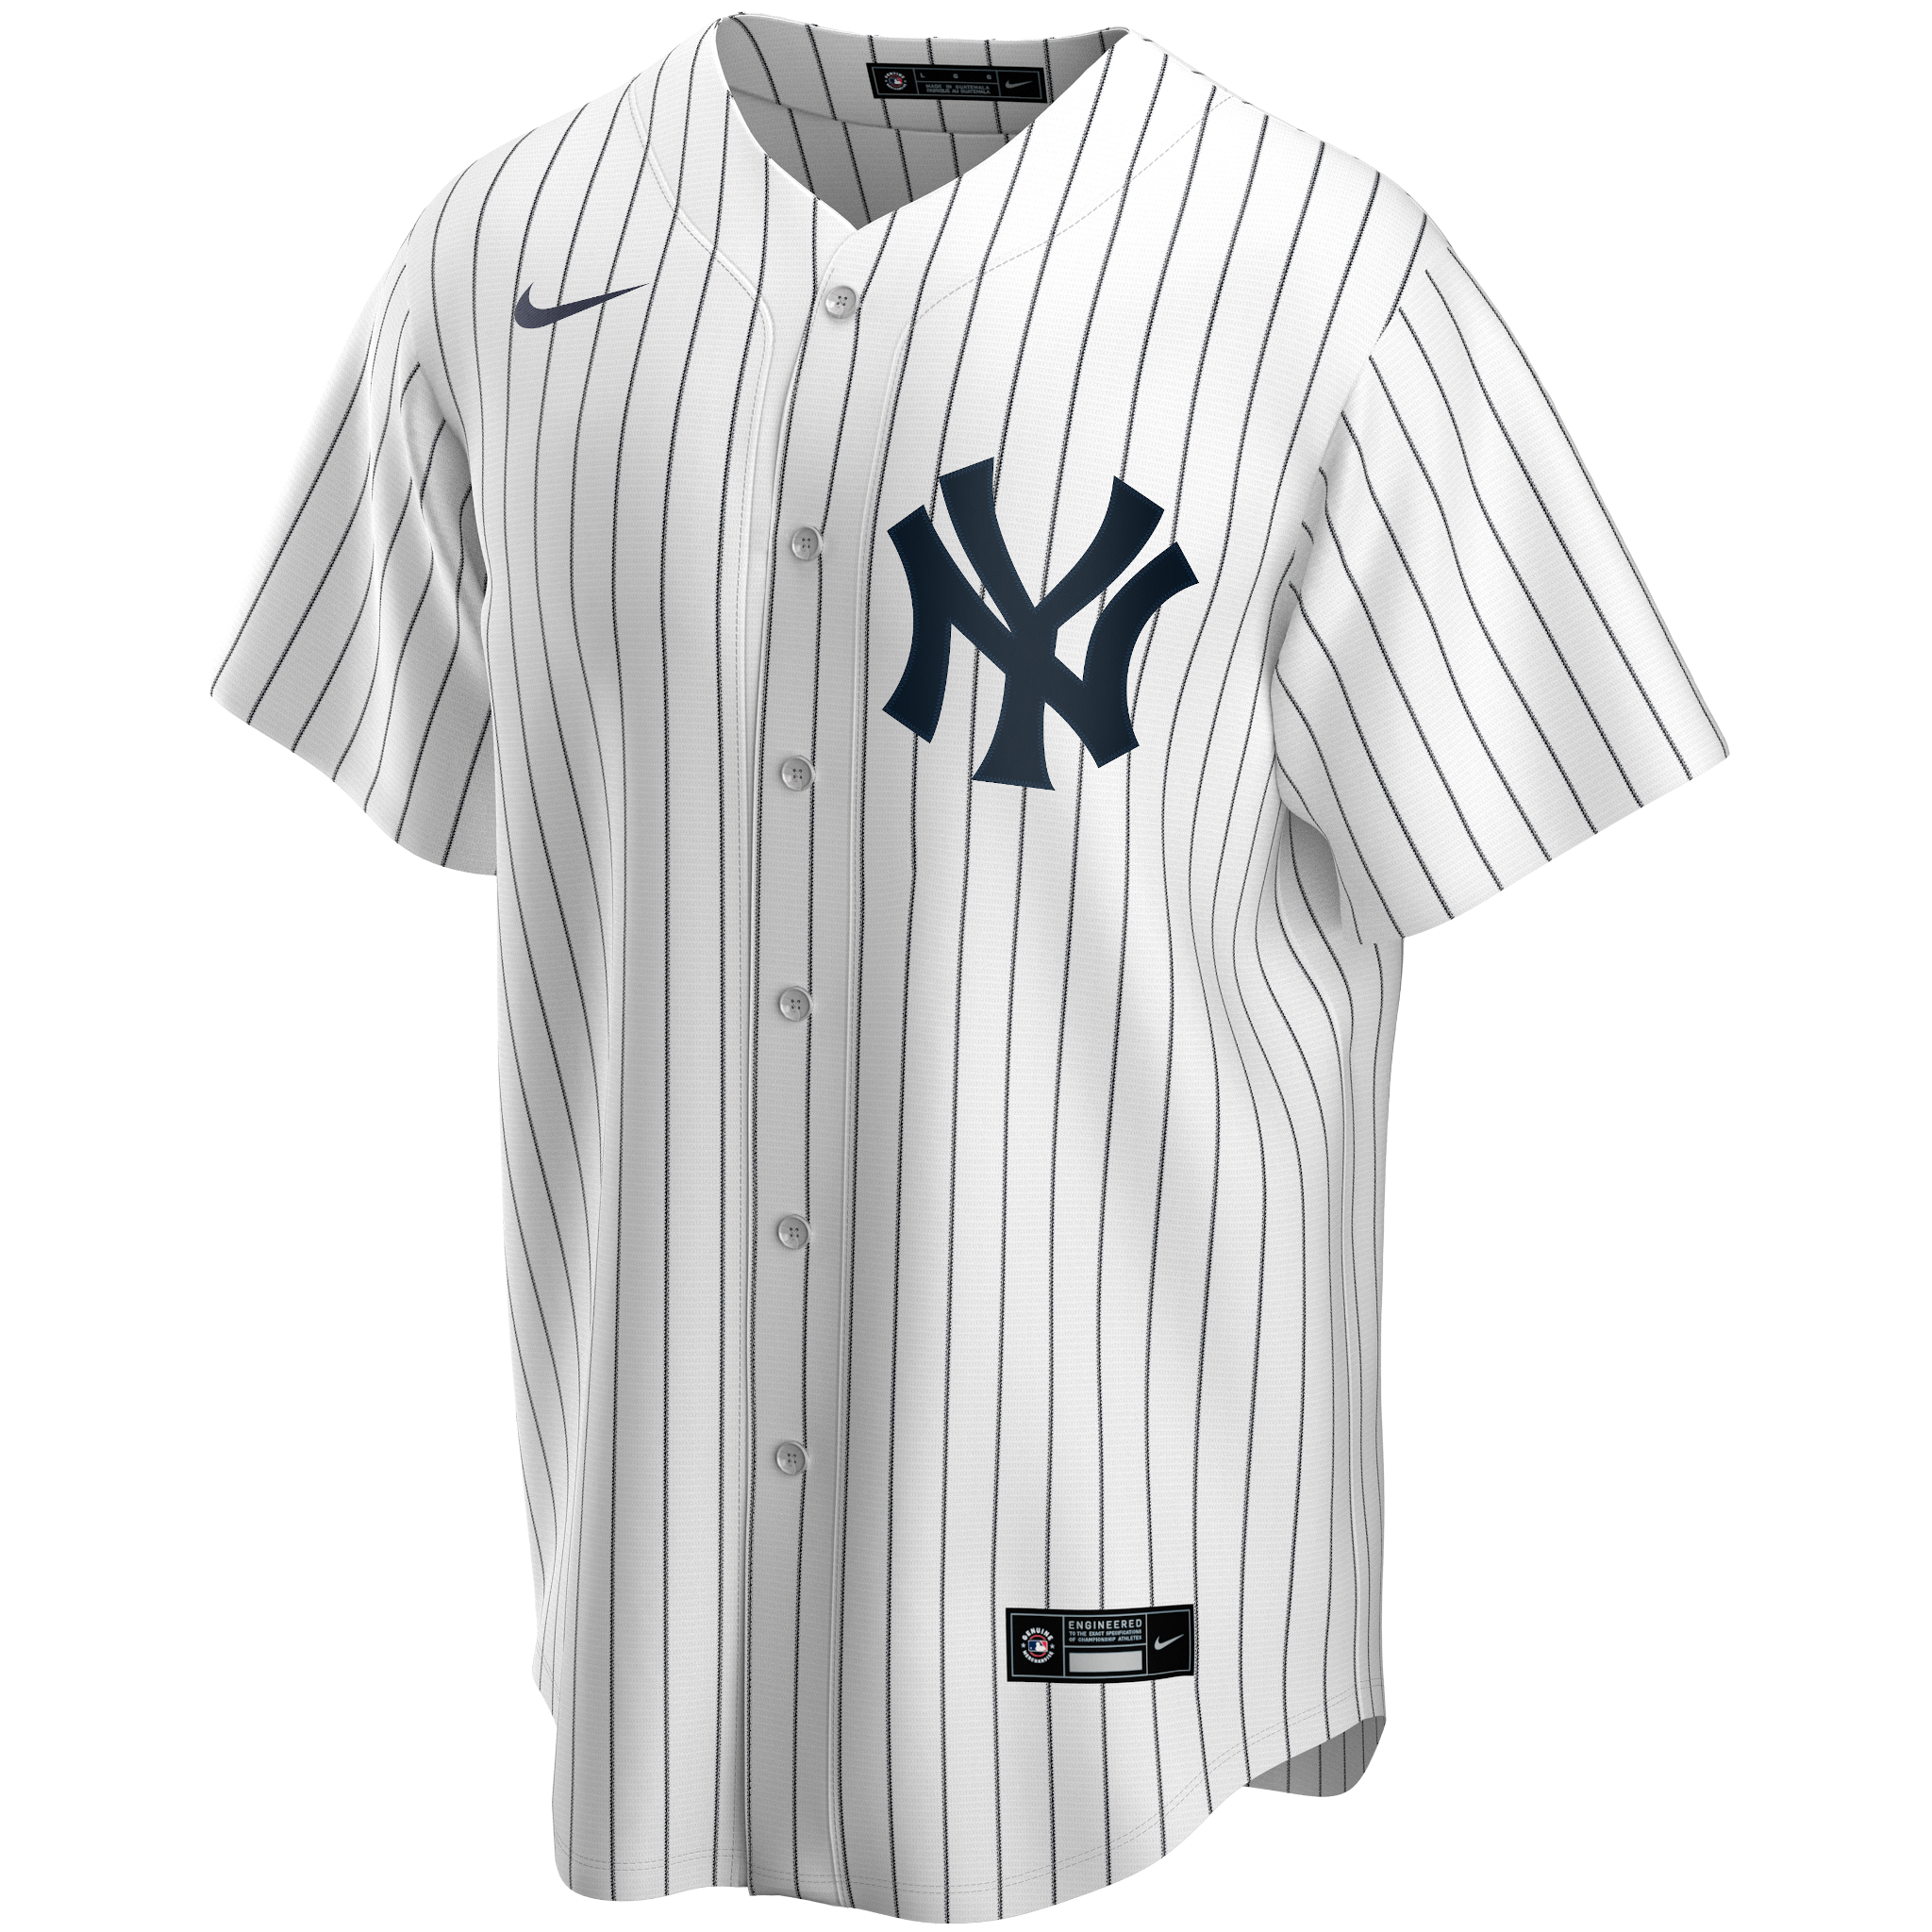 Yankees Derek Jeter Baby Clothes & Accessories - CafePress